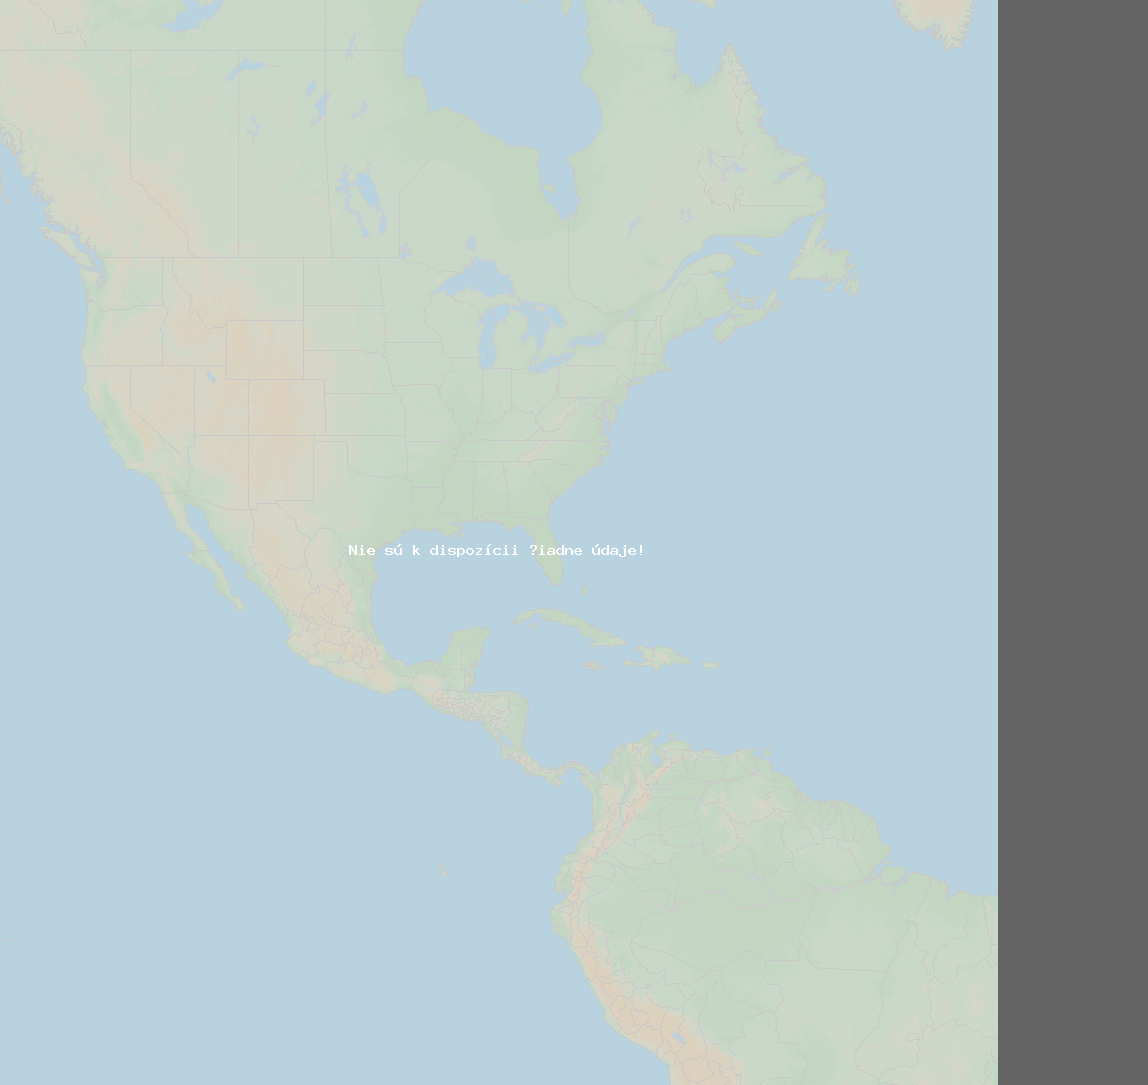 Pomer bleskov (Stanica Haleakala) North America 2020 September